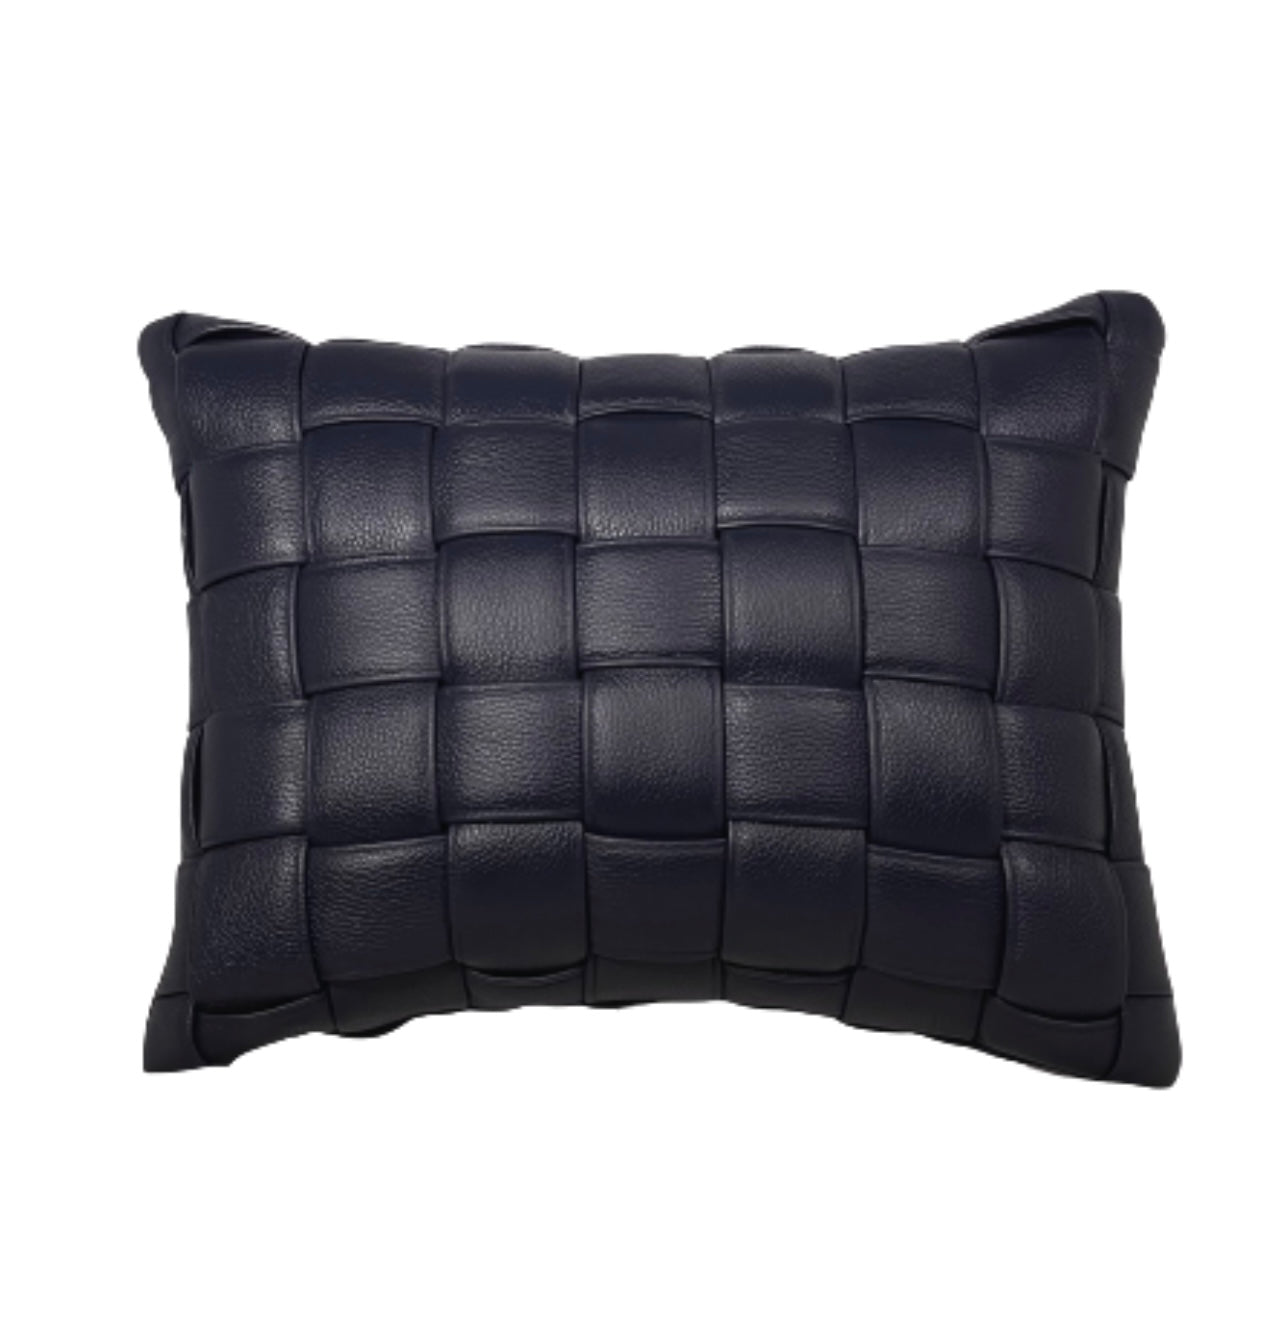 Woven Leather Throw Pillows